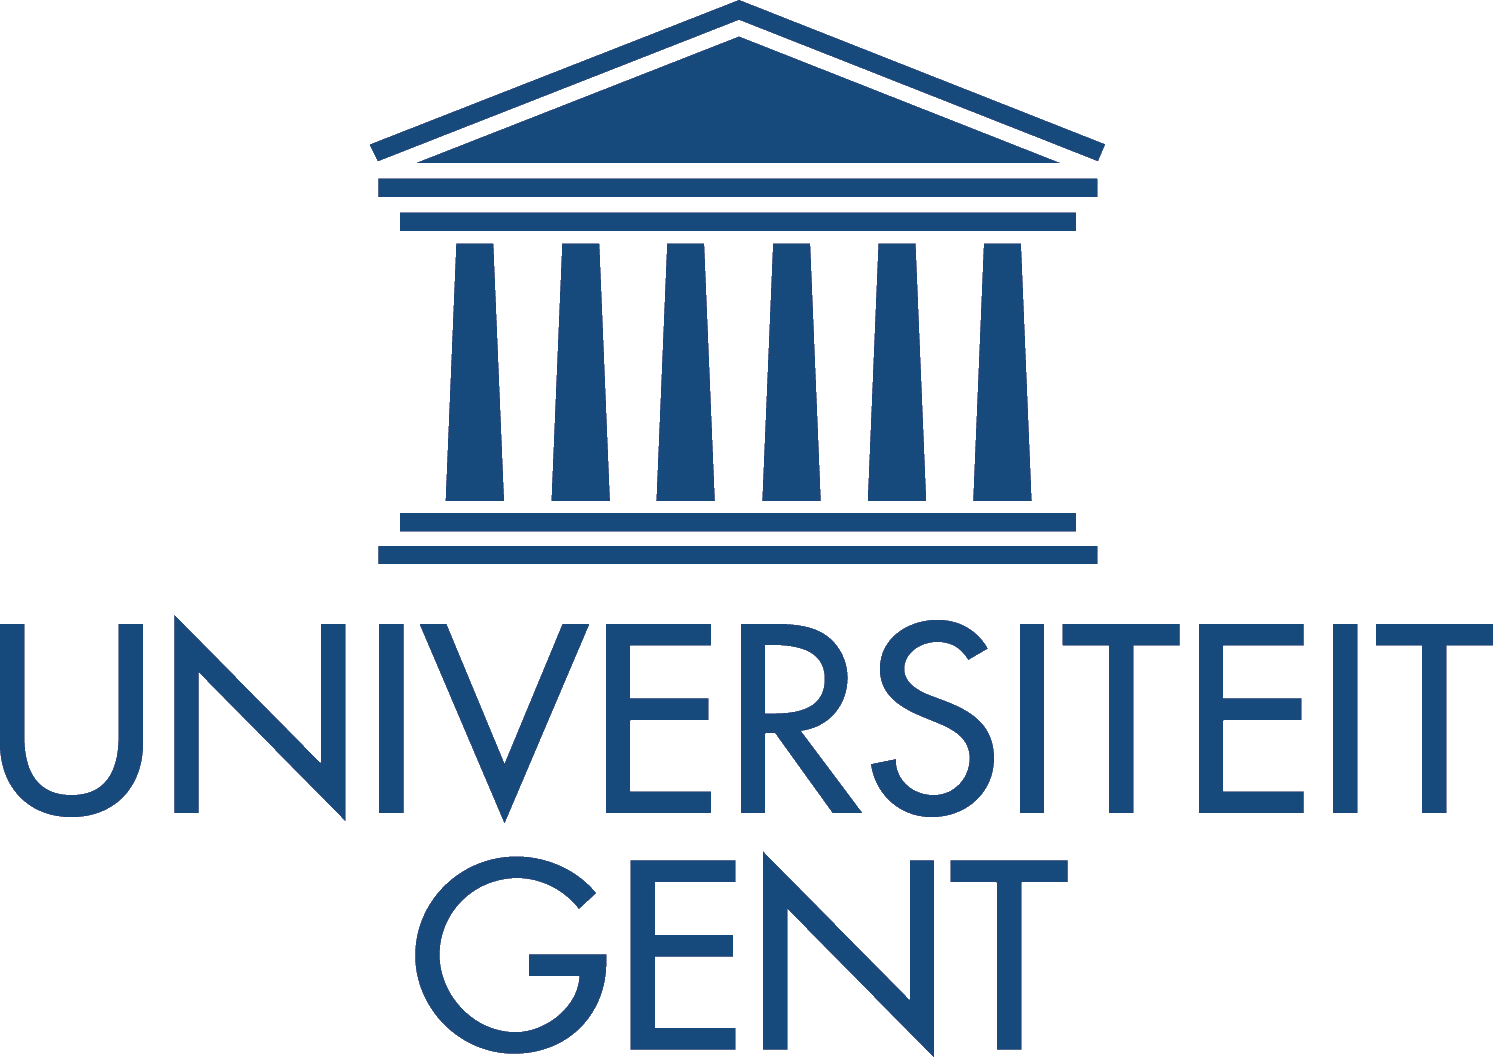 ghent university logo 08